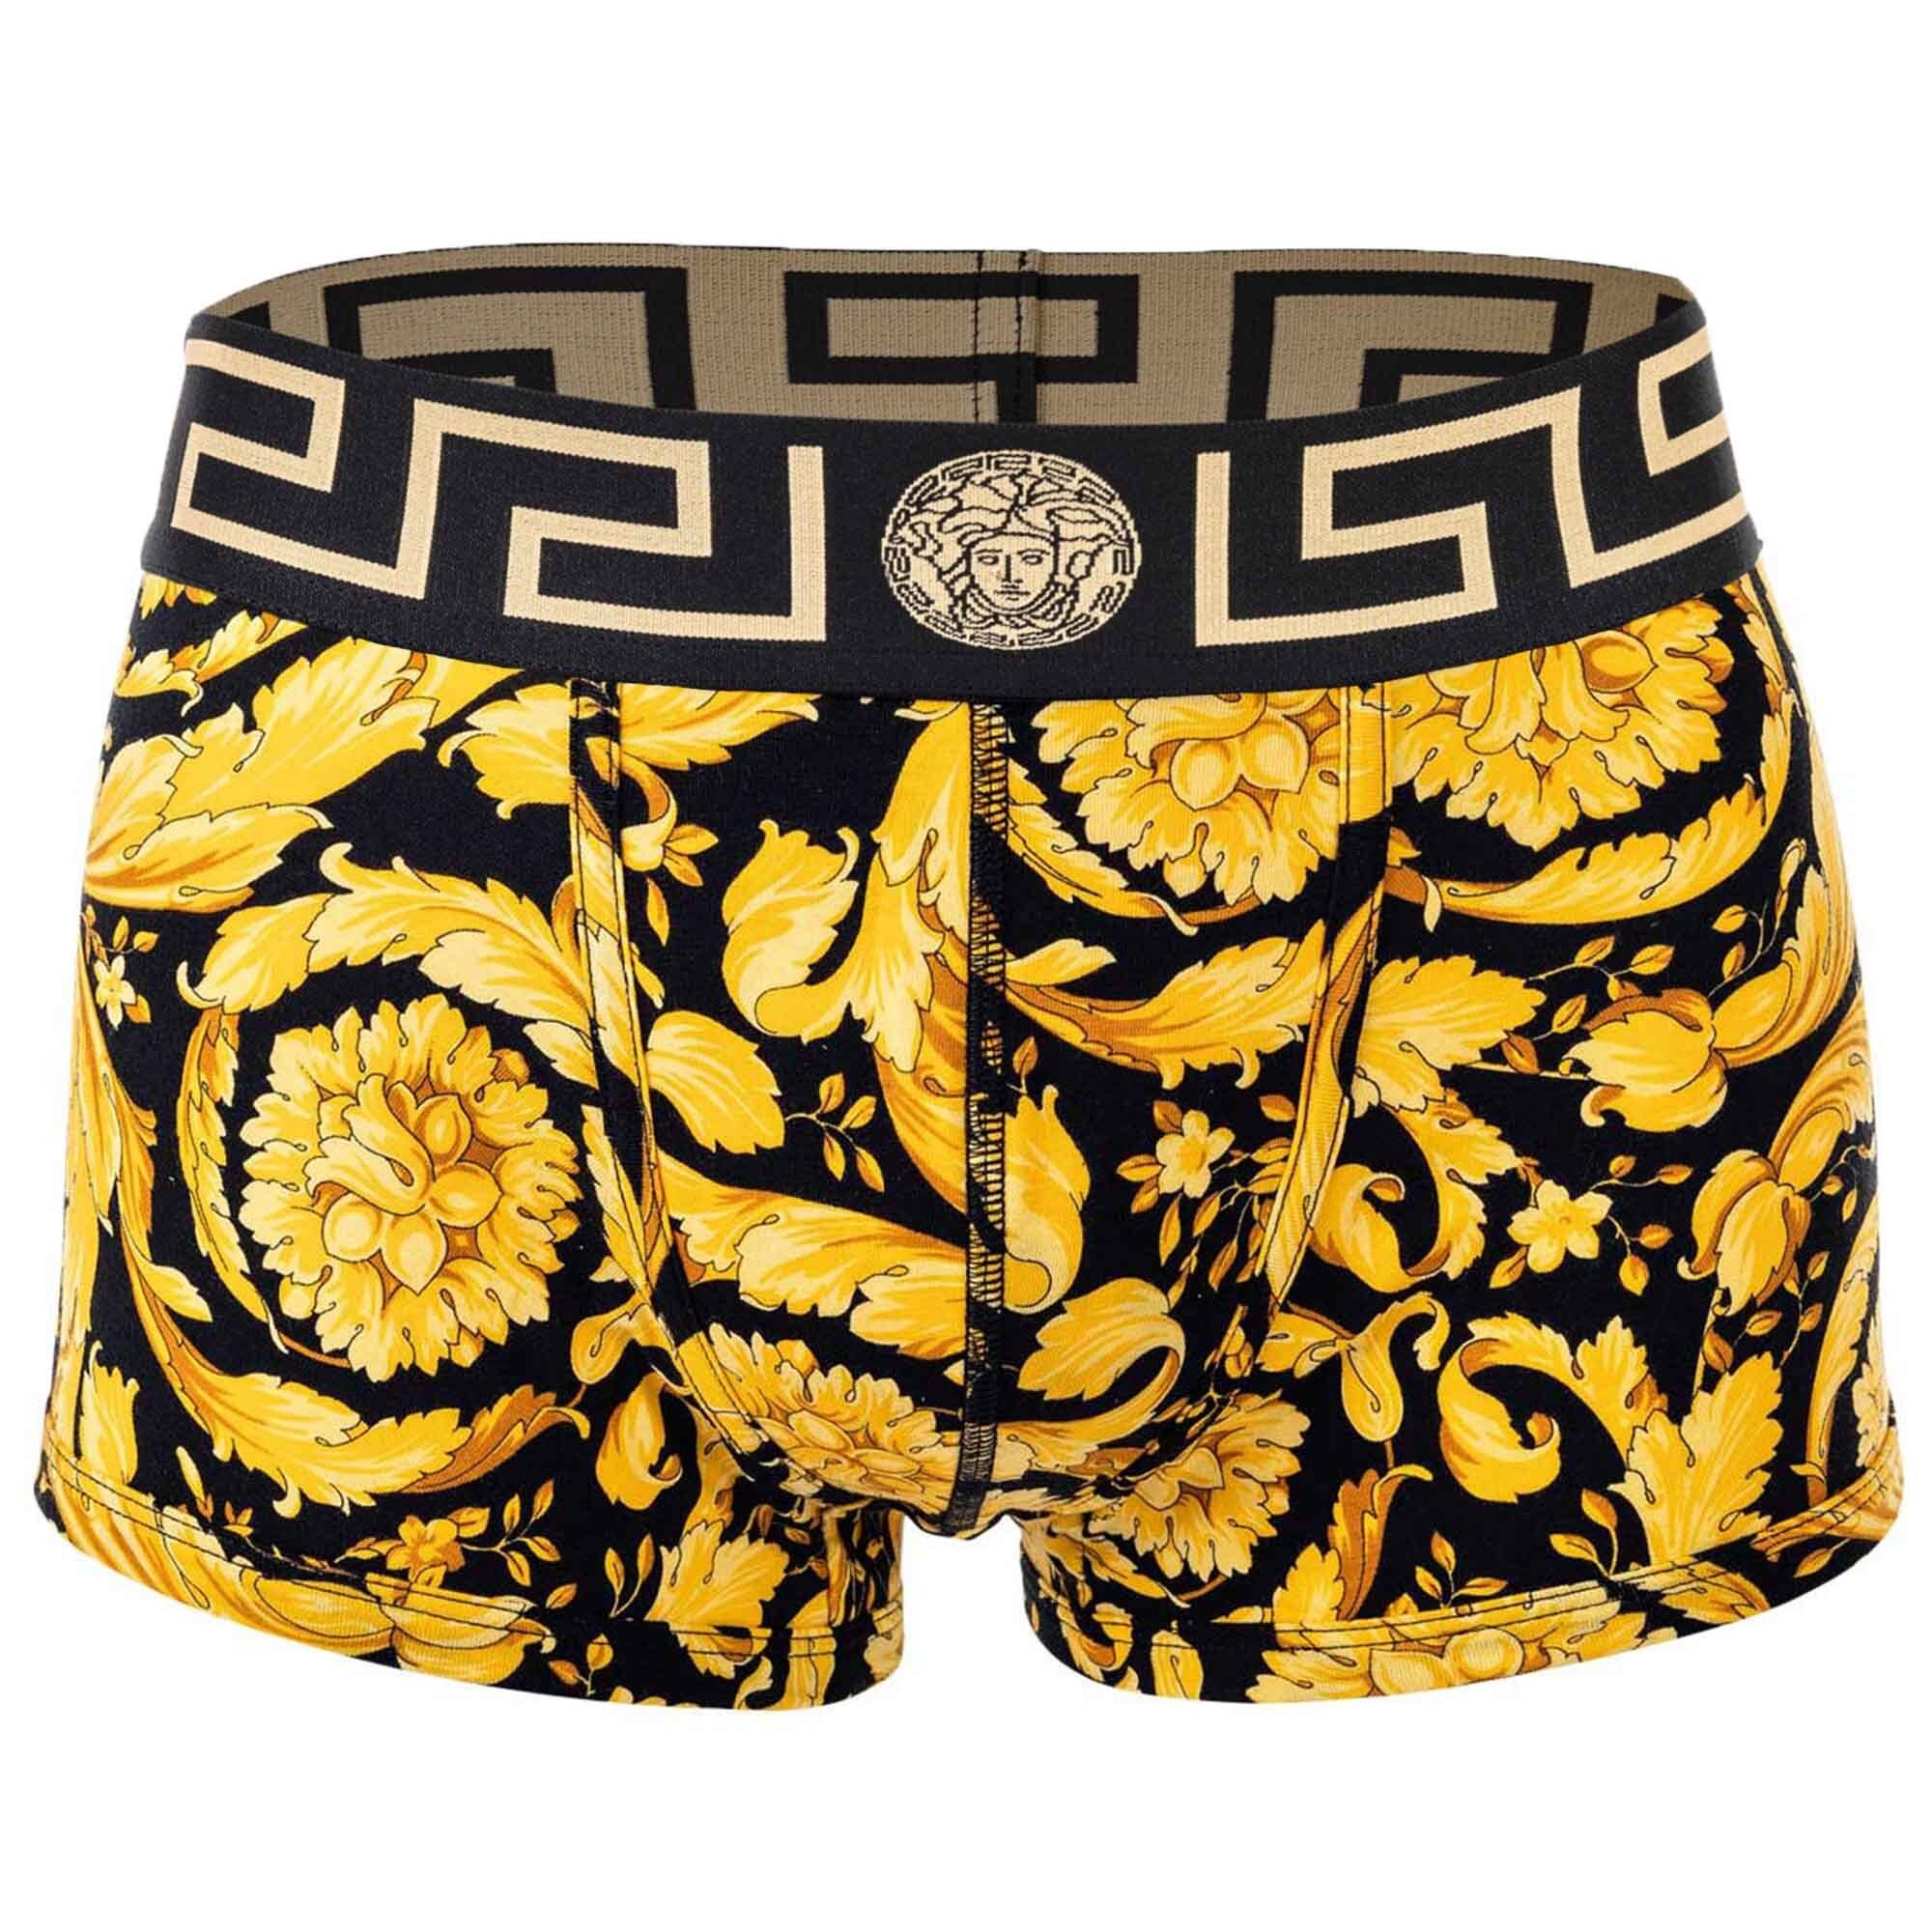 Versace Boxer Herren Boxer Shorts - Trunk, Retroshorts, Stretch Schwarz/Gold